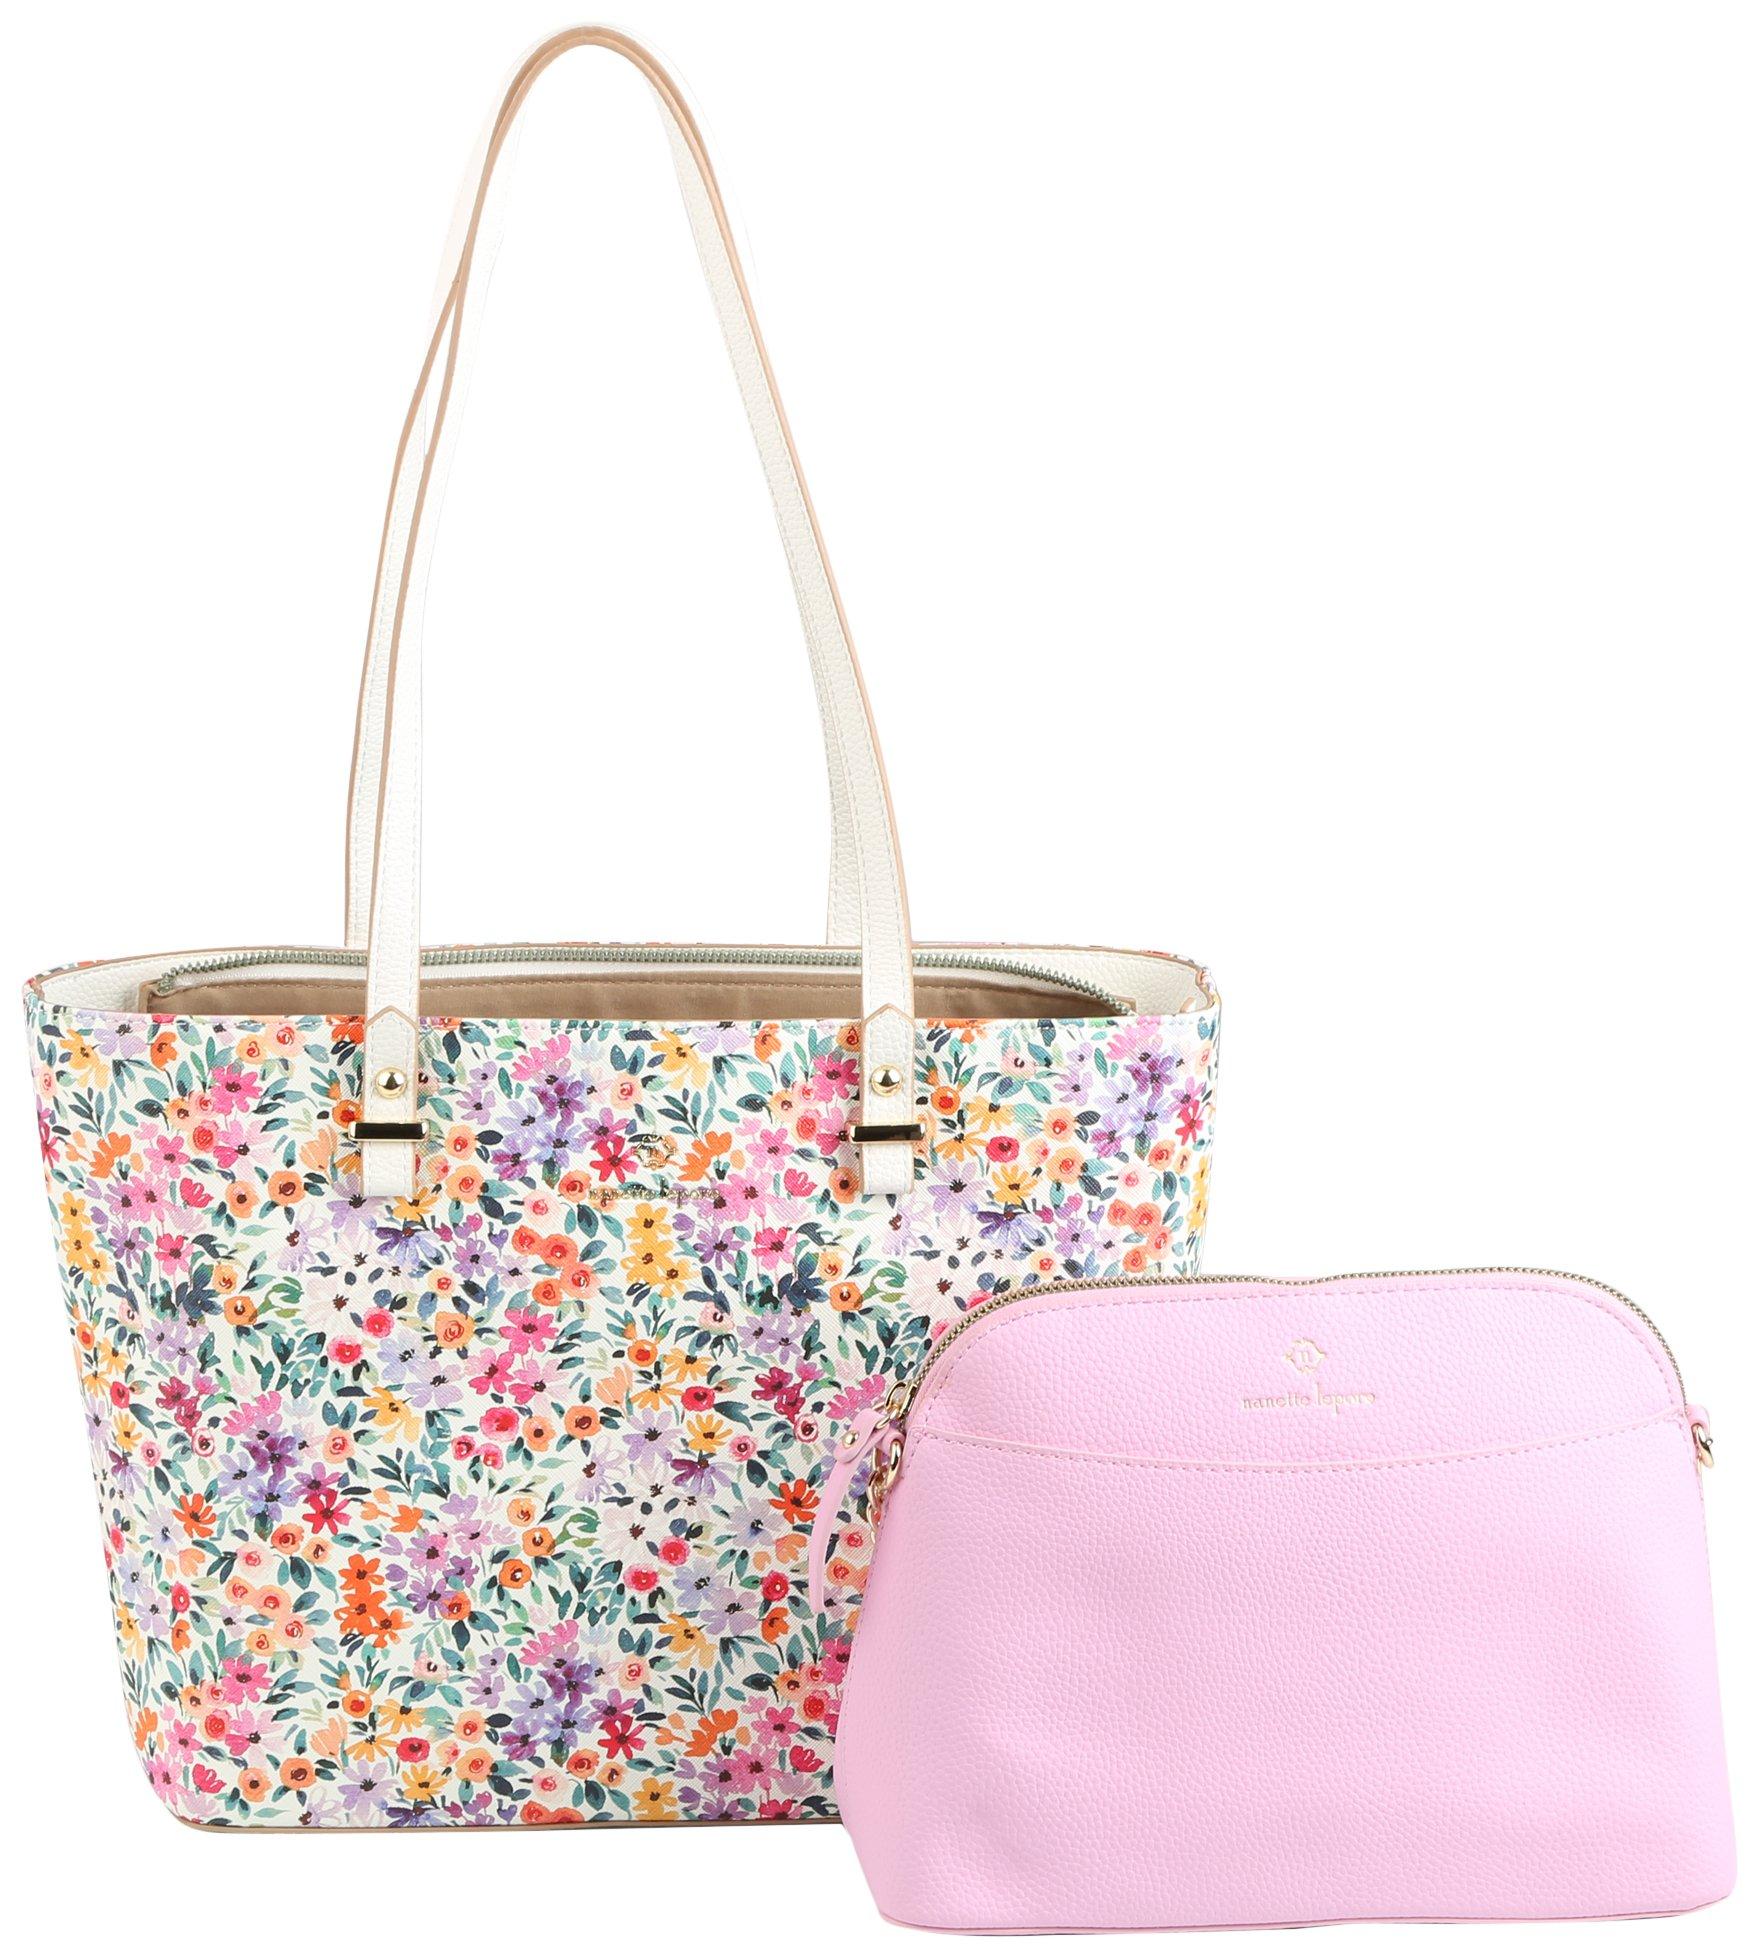 Nanette Lepore Brielle Floral Bag-In-A-Bag Tote & Crossbody